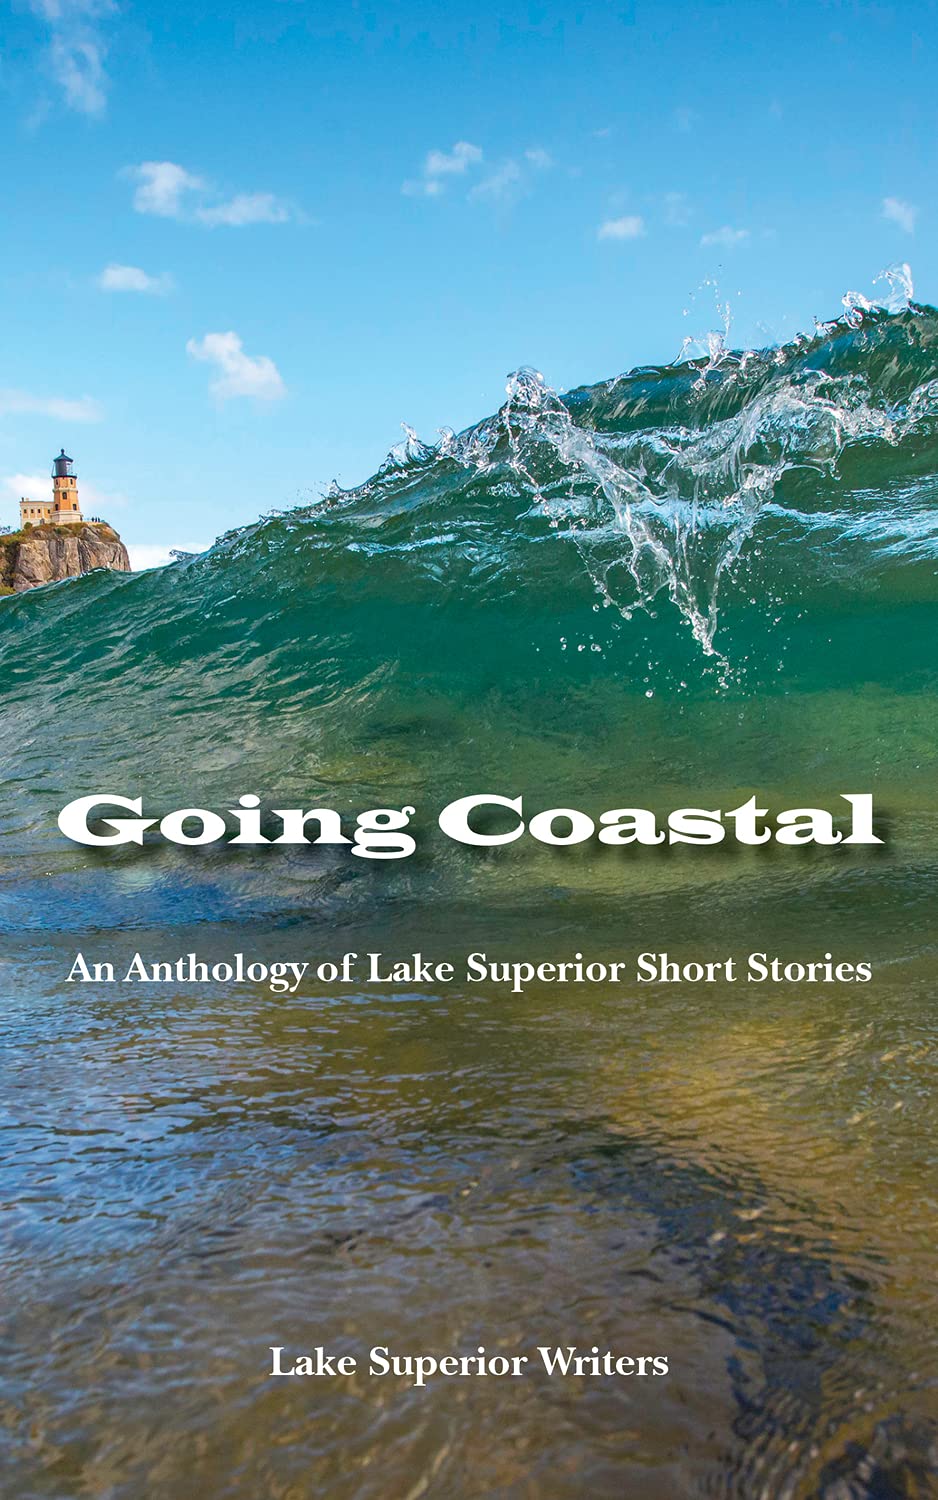 Going Coastal: An Anthology of Lake Superior Short Stories